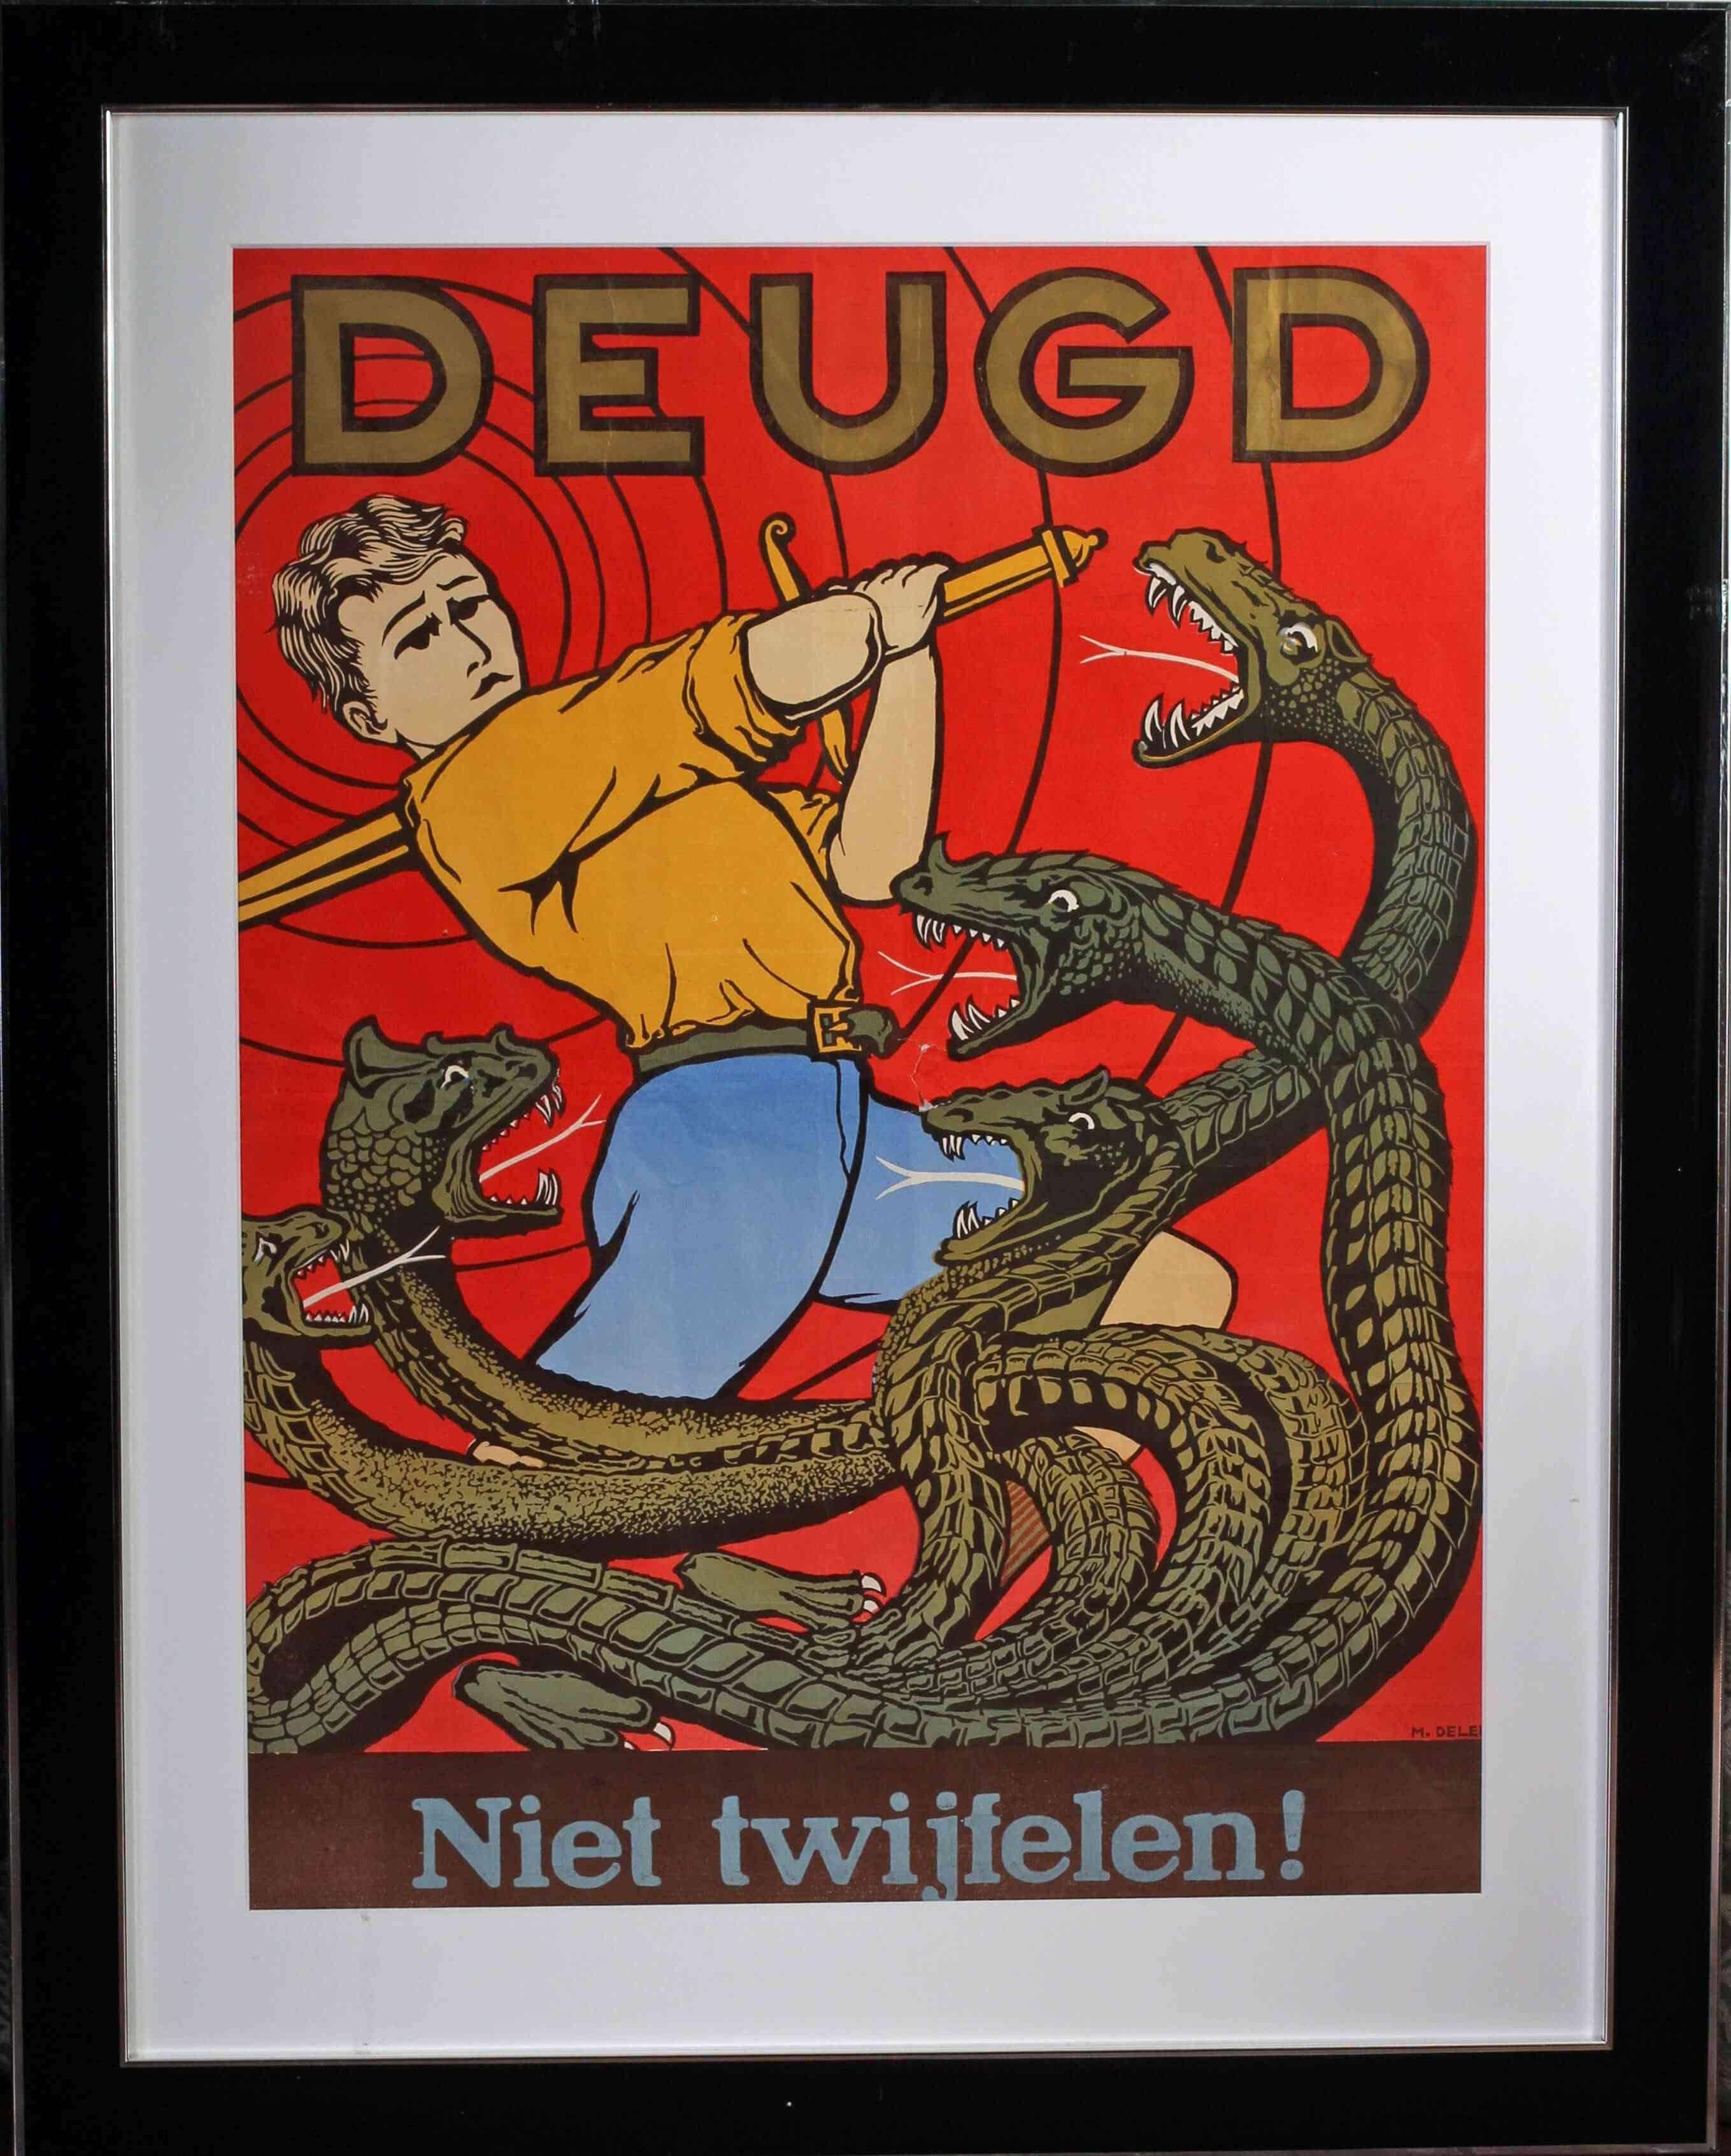 Unknown Figurative Print - Original 1930s Dutch propaganda poster by M. Deleu (Virtue - do not doubt)